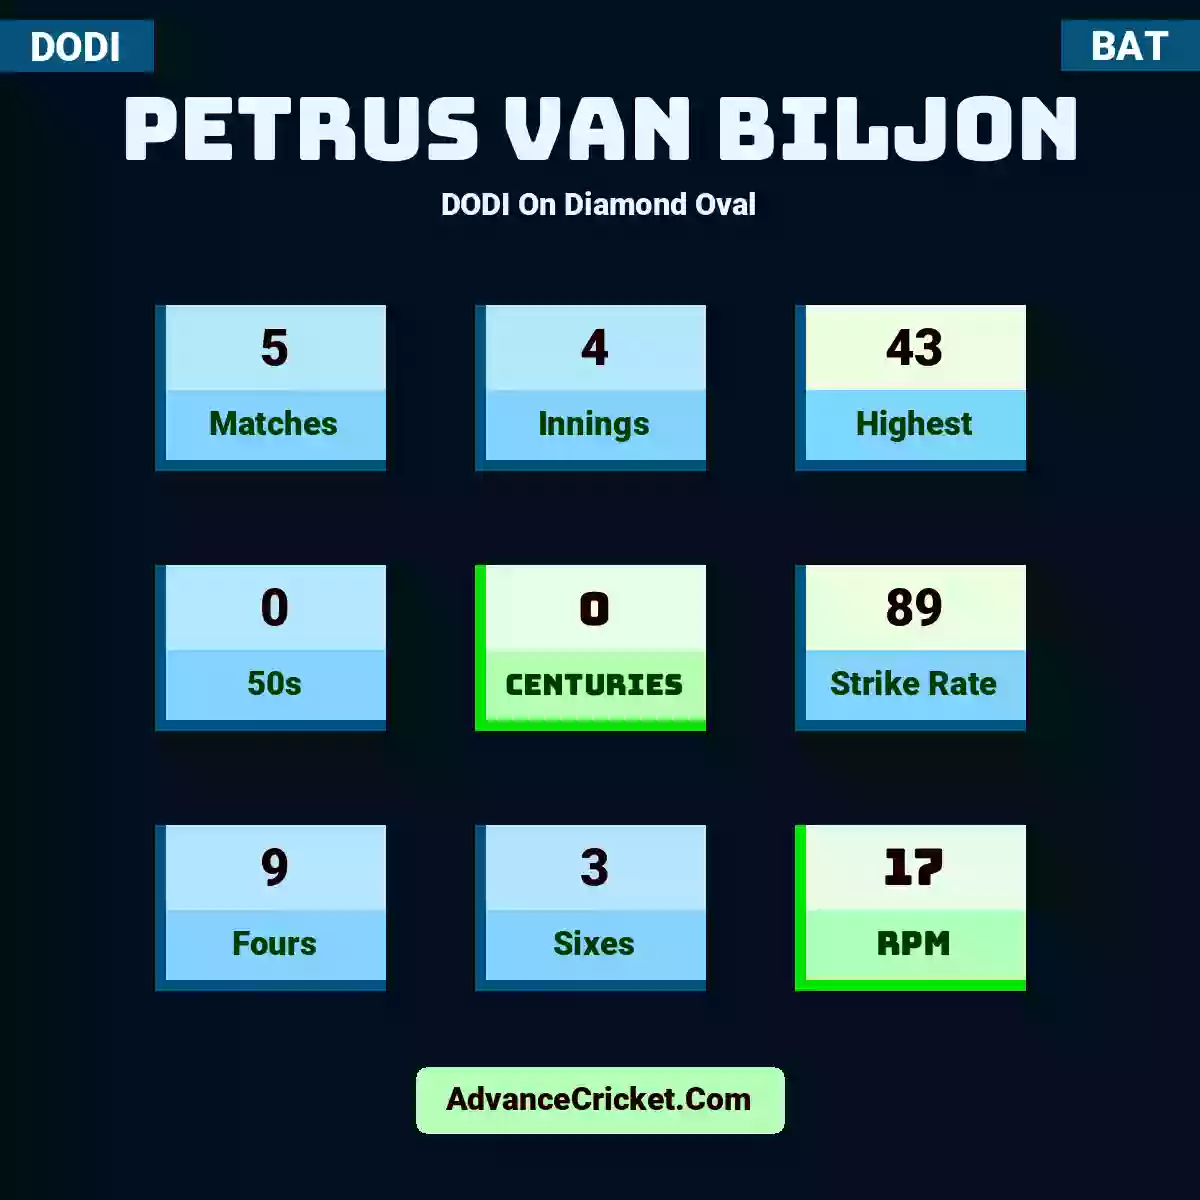 Petrus van Biljon DODI  On Diamond Oval, Petrus van Biljon played 5 matches, scored 43 runs as highest, 0 half-centuries, and 0 centuries, with a strike rate of 89. P.Biljon hit 9 fours and 3 sixes, with an RPM of 17.